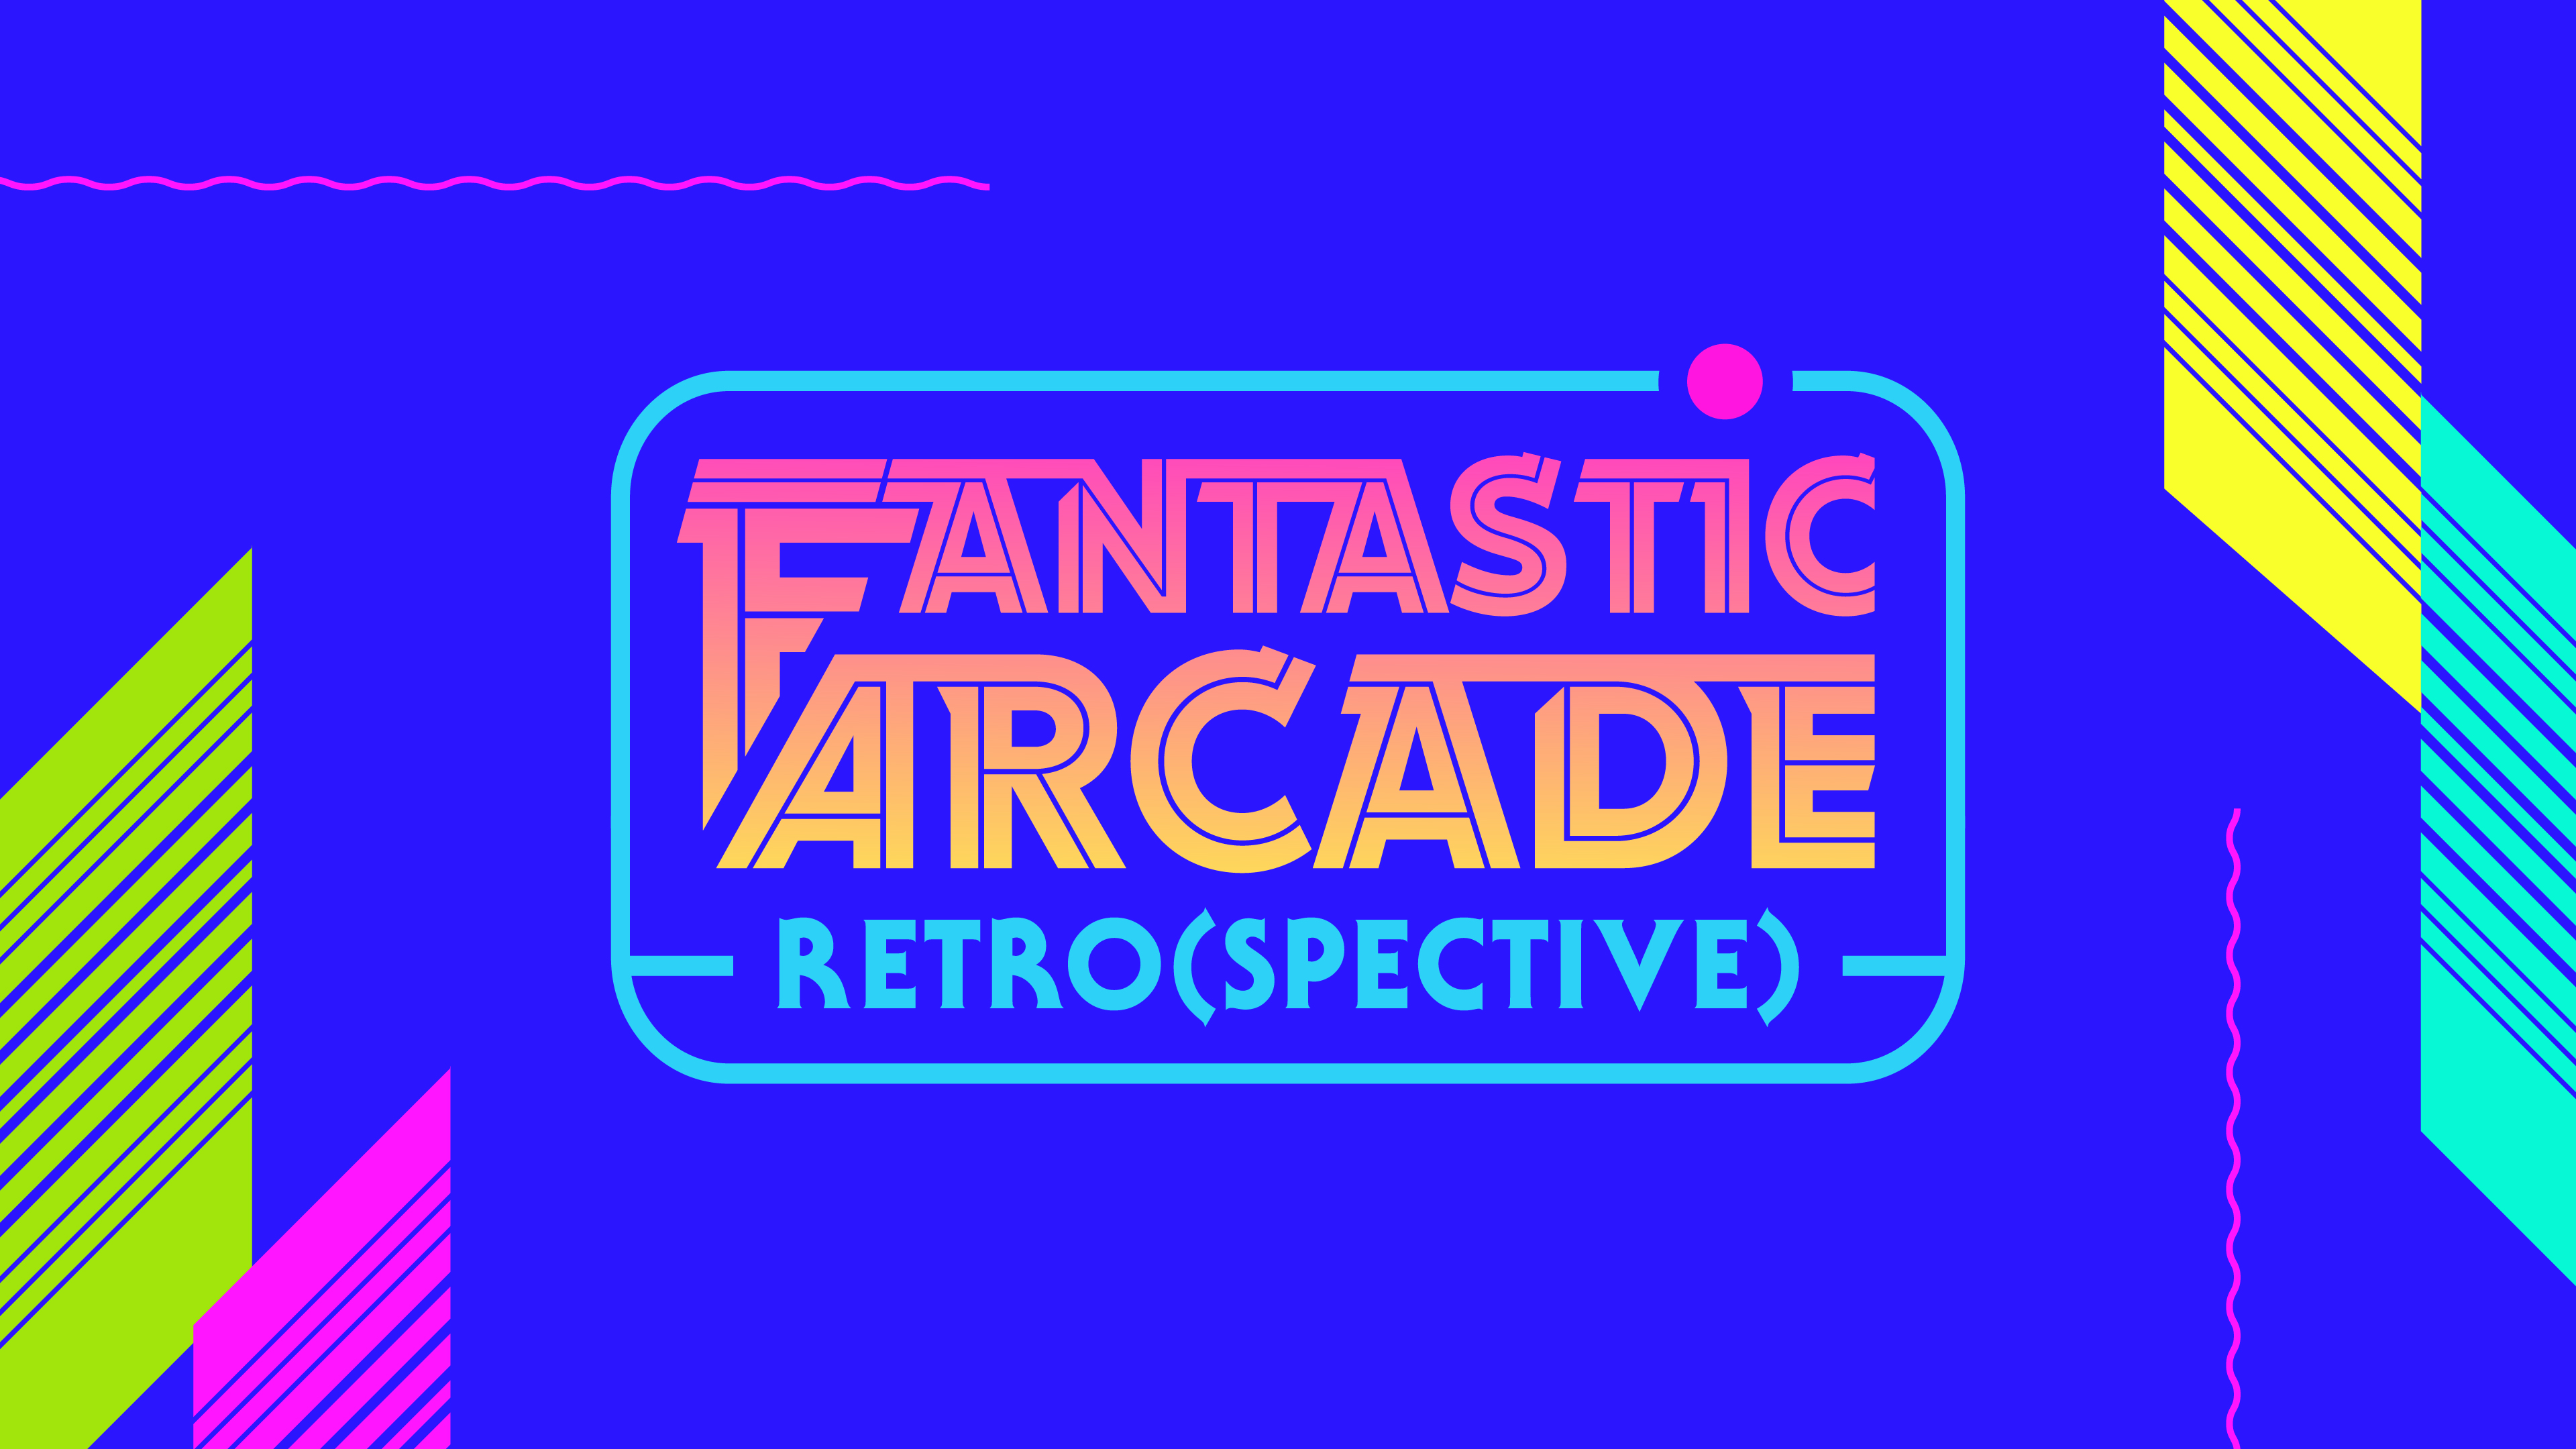 Fantastic Arcade Retrospective